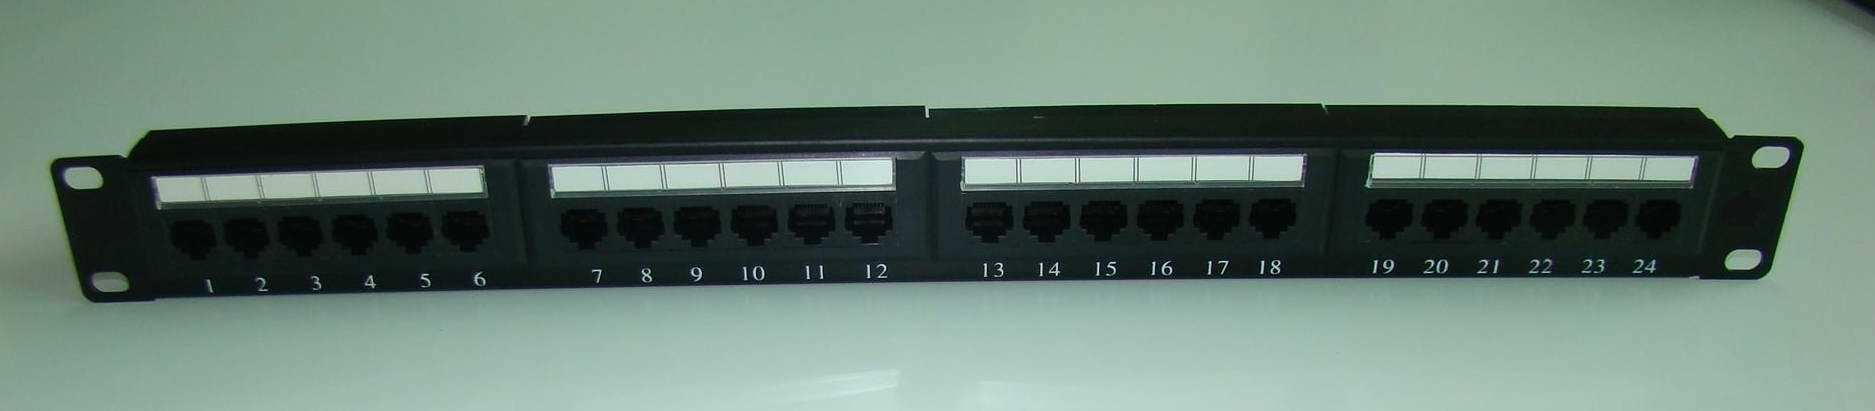 24 Port UTP Cat5e Patch Panel (TP11)